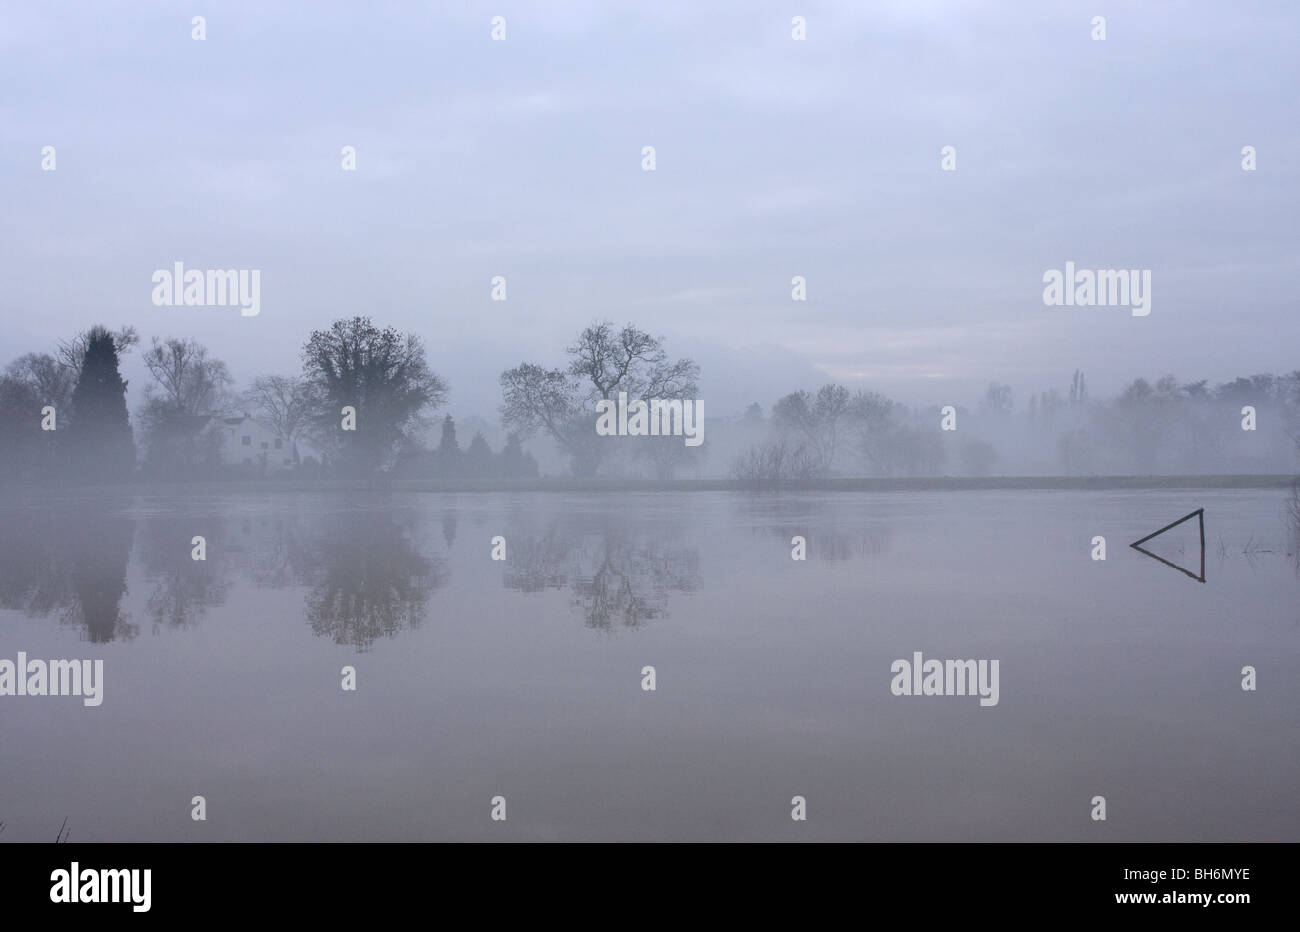 A misty scene on the River Severn Stock Photo